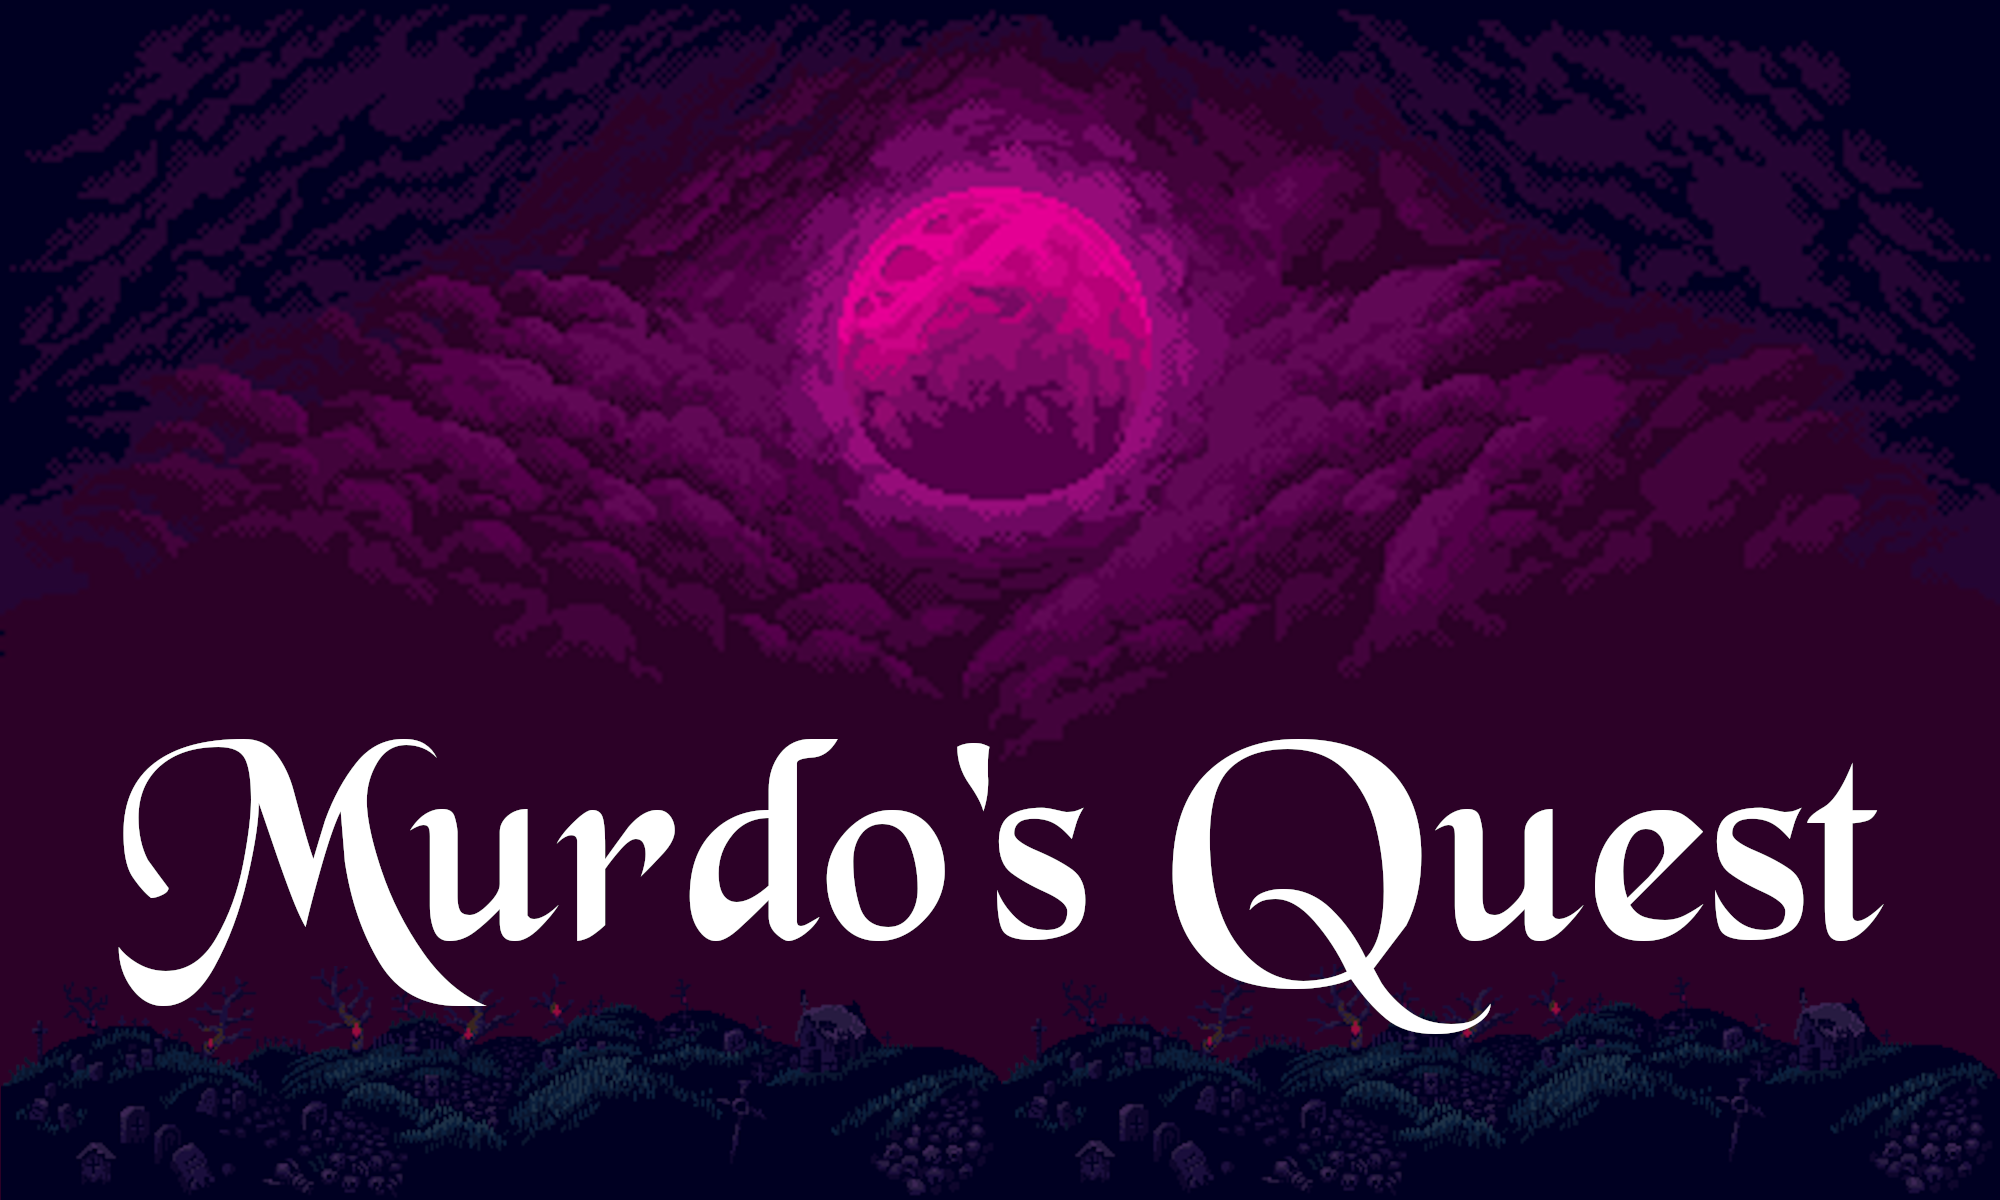 Murdo's Quest